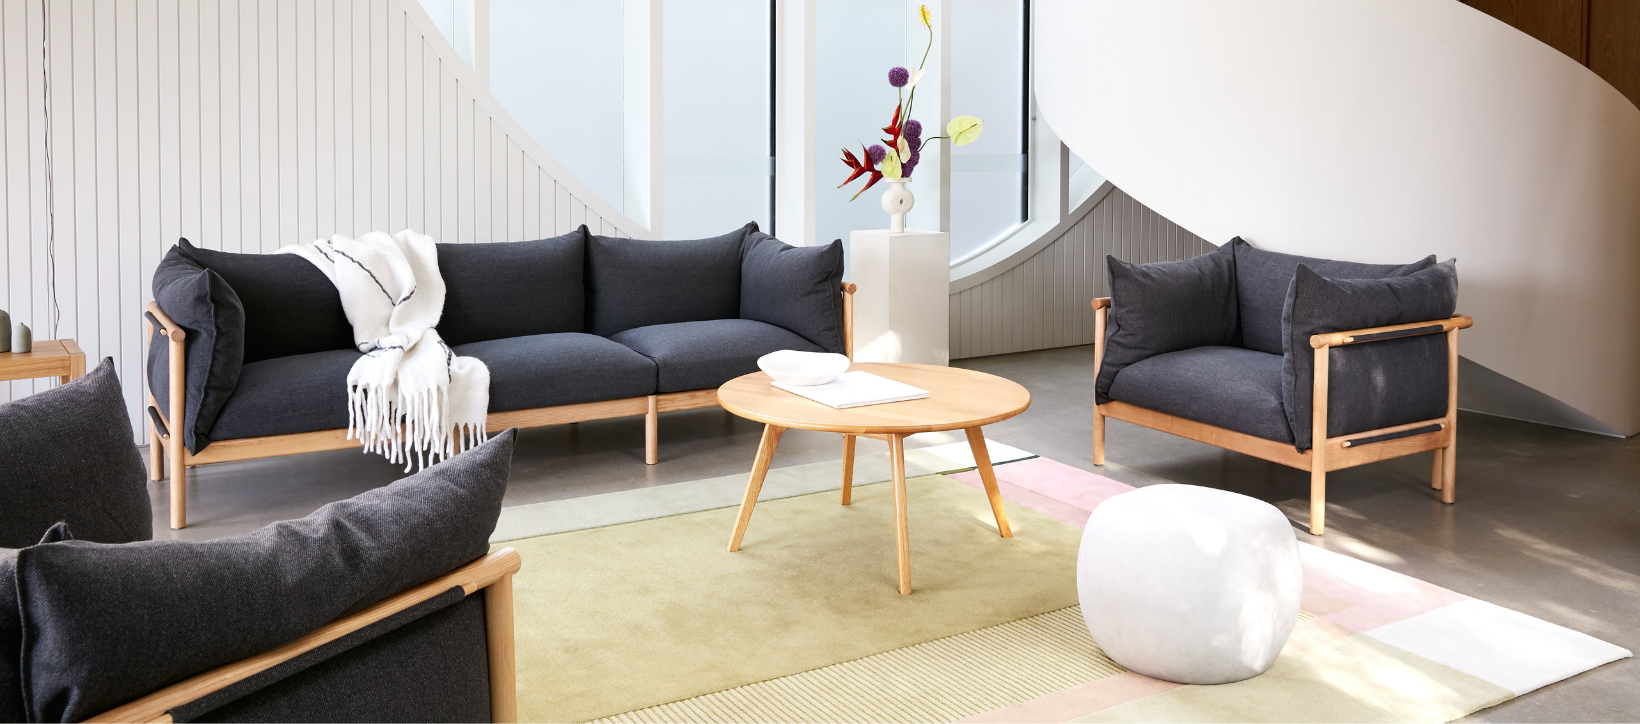 IconByDesign helps Alana Hadid find her forever furniture